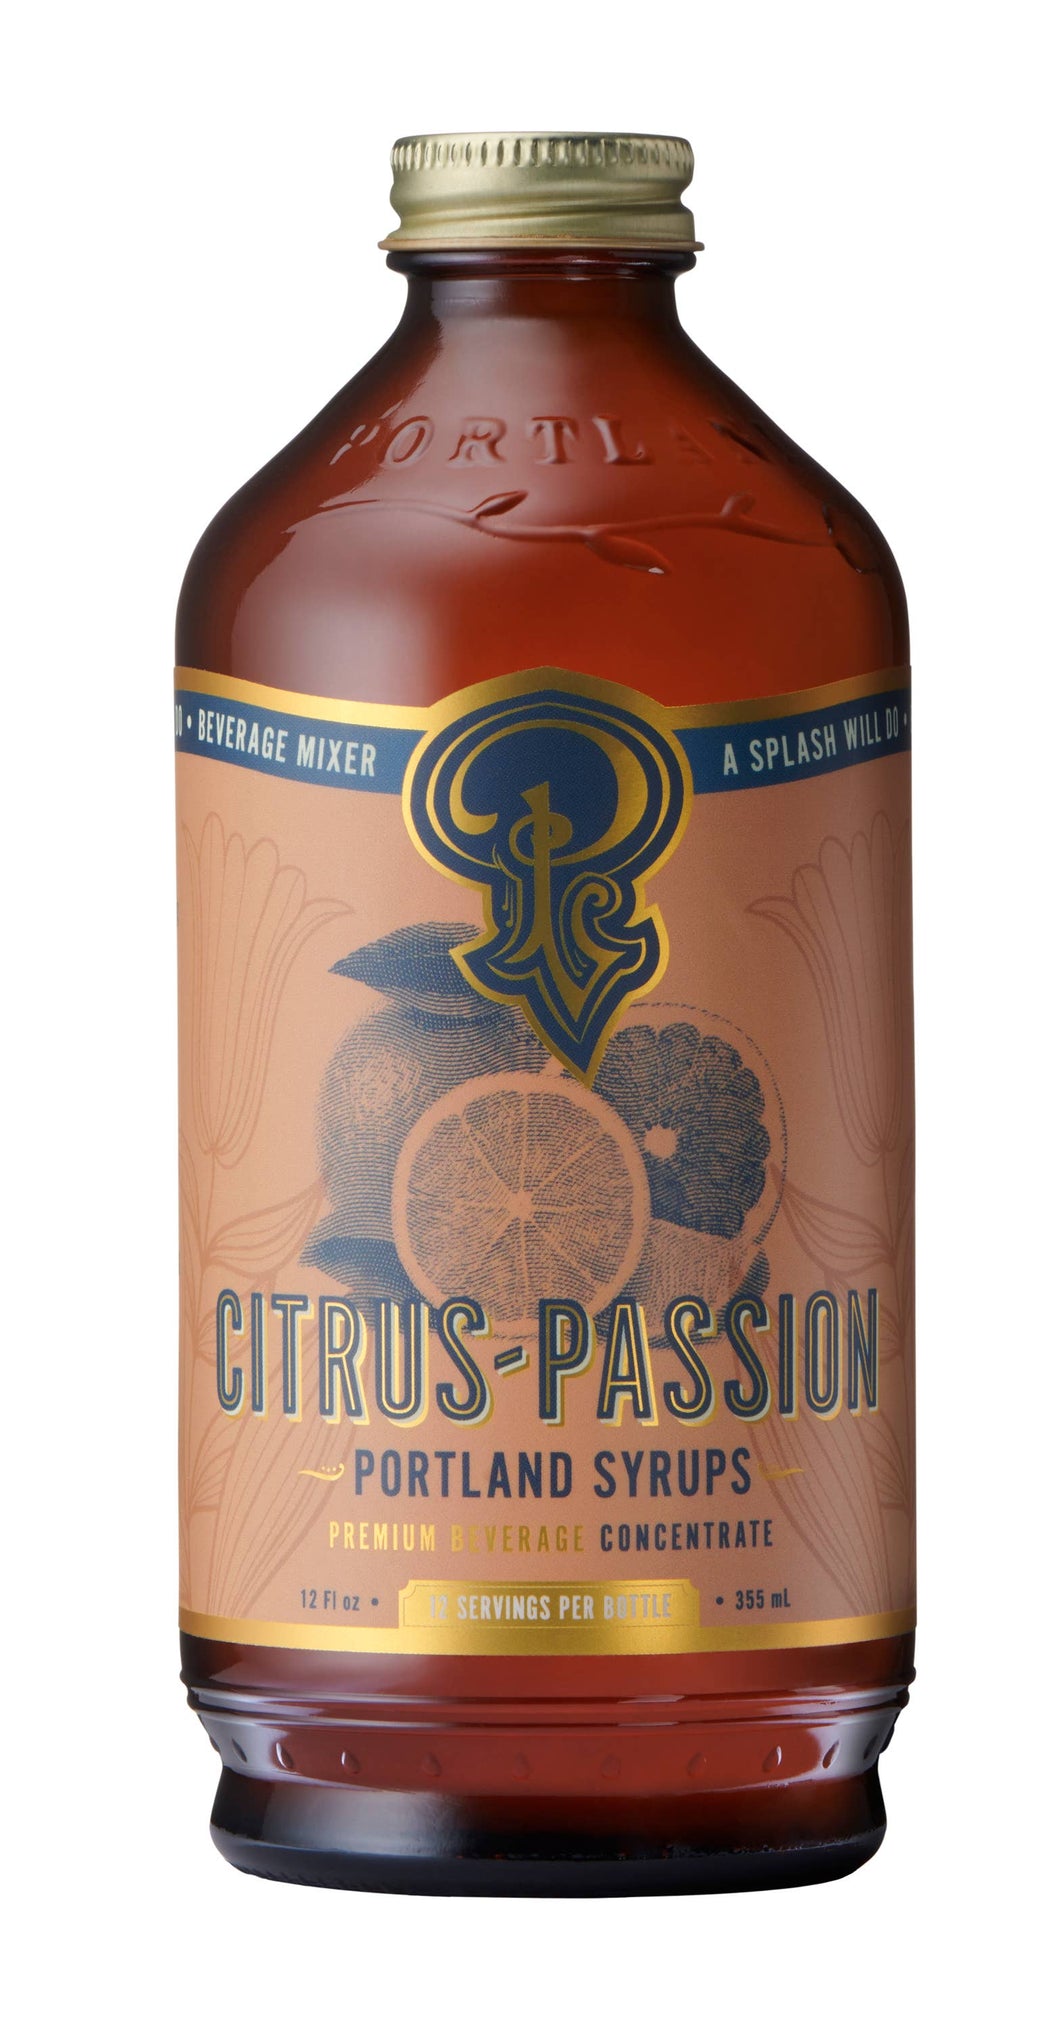 Portland Syrups Citrus Passion Fruit Syrup (12oz)